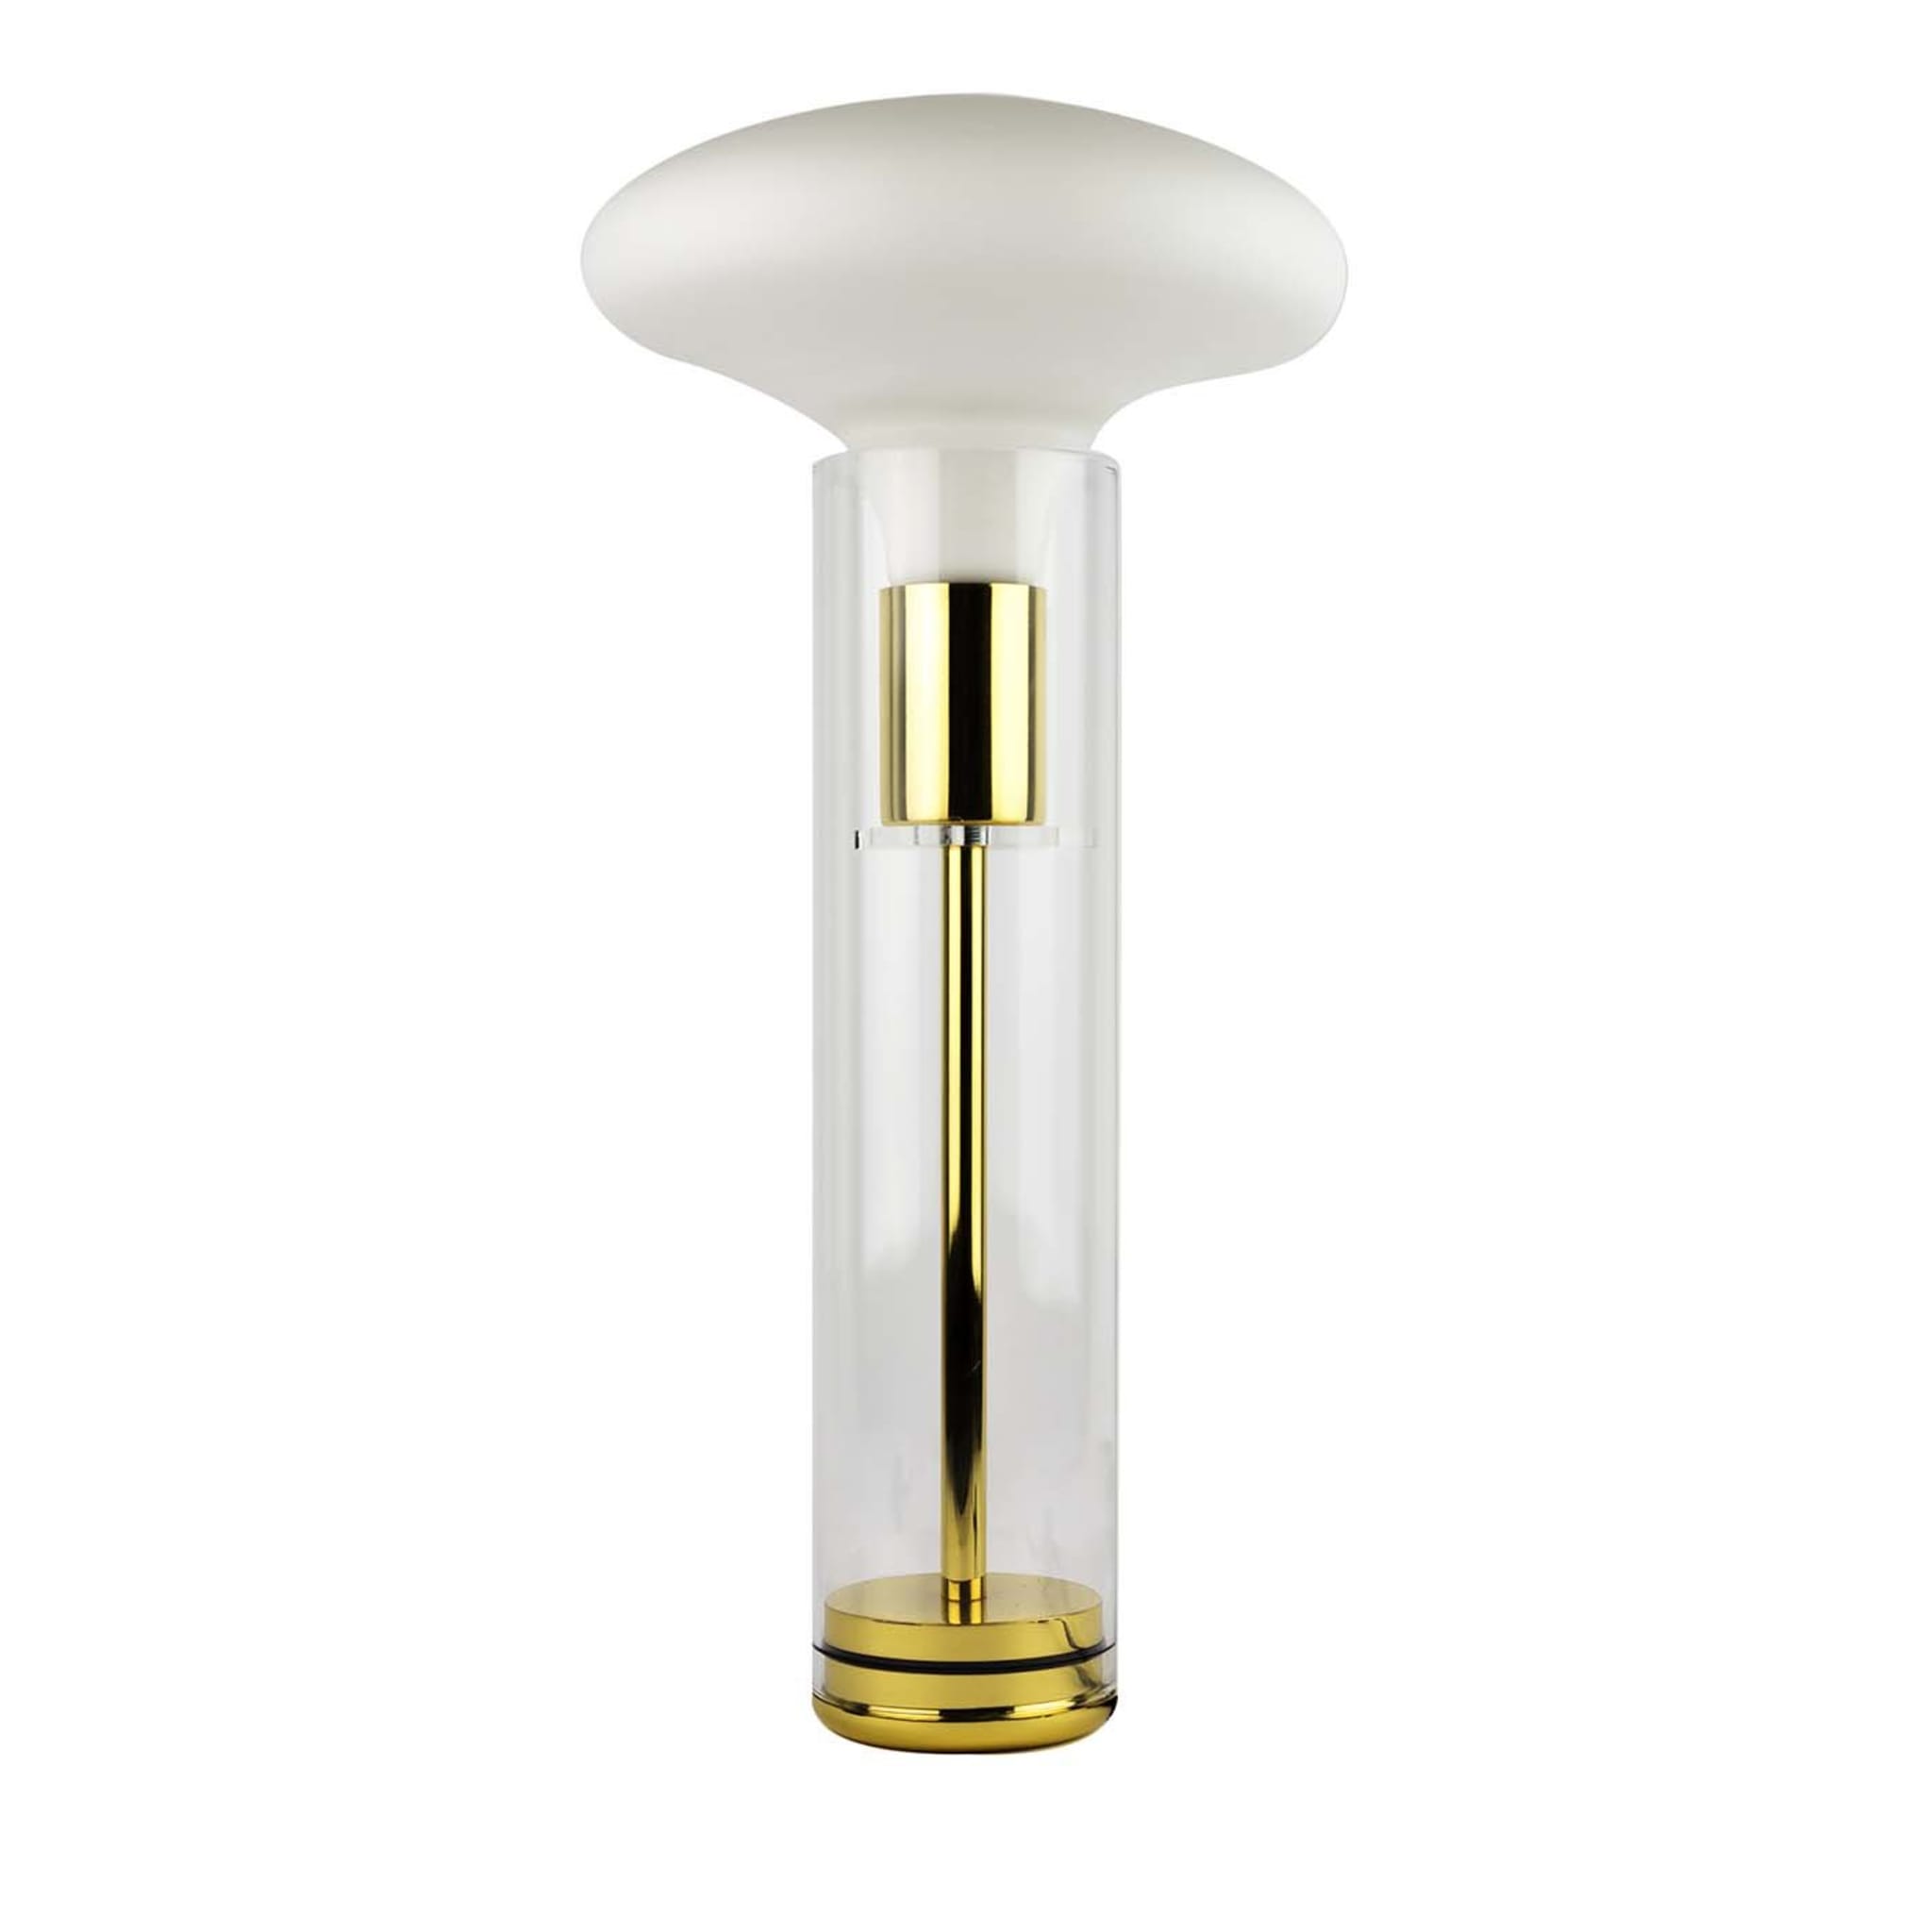 Stem 320 Glass Floor Lamp by Alalda Design - Main view